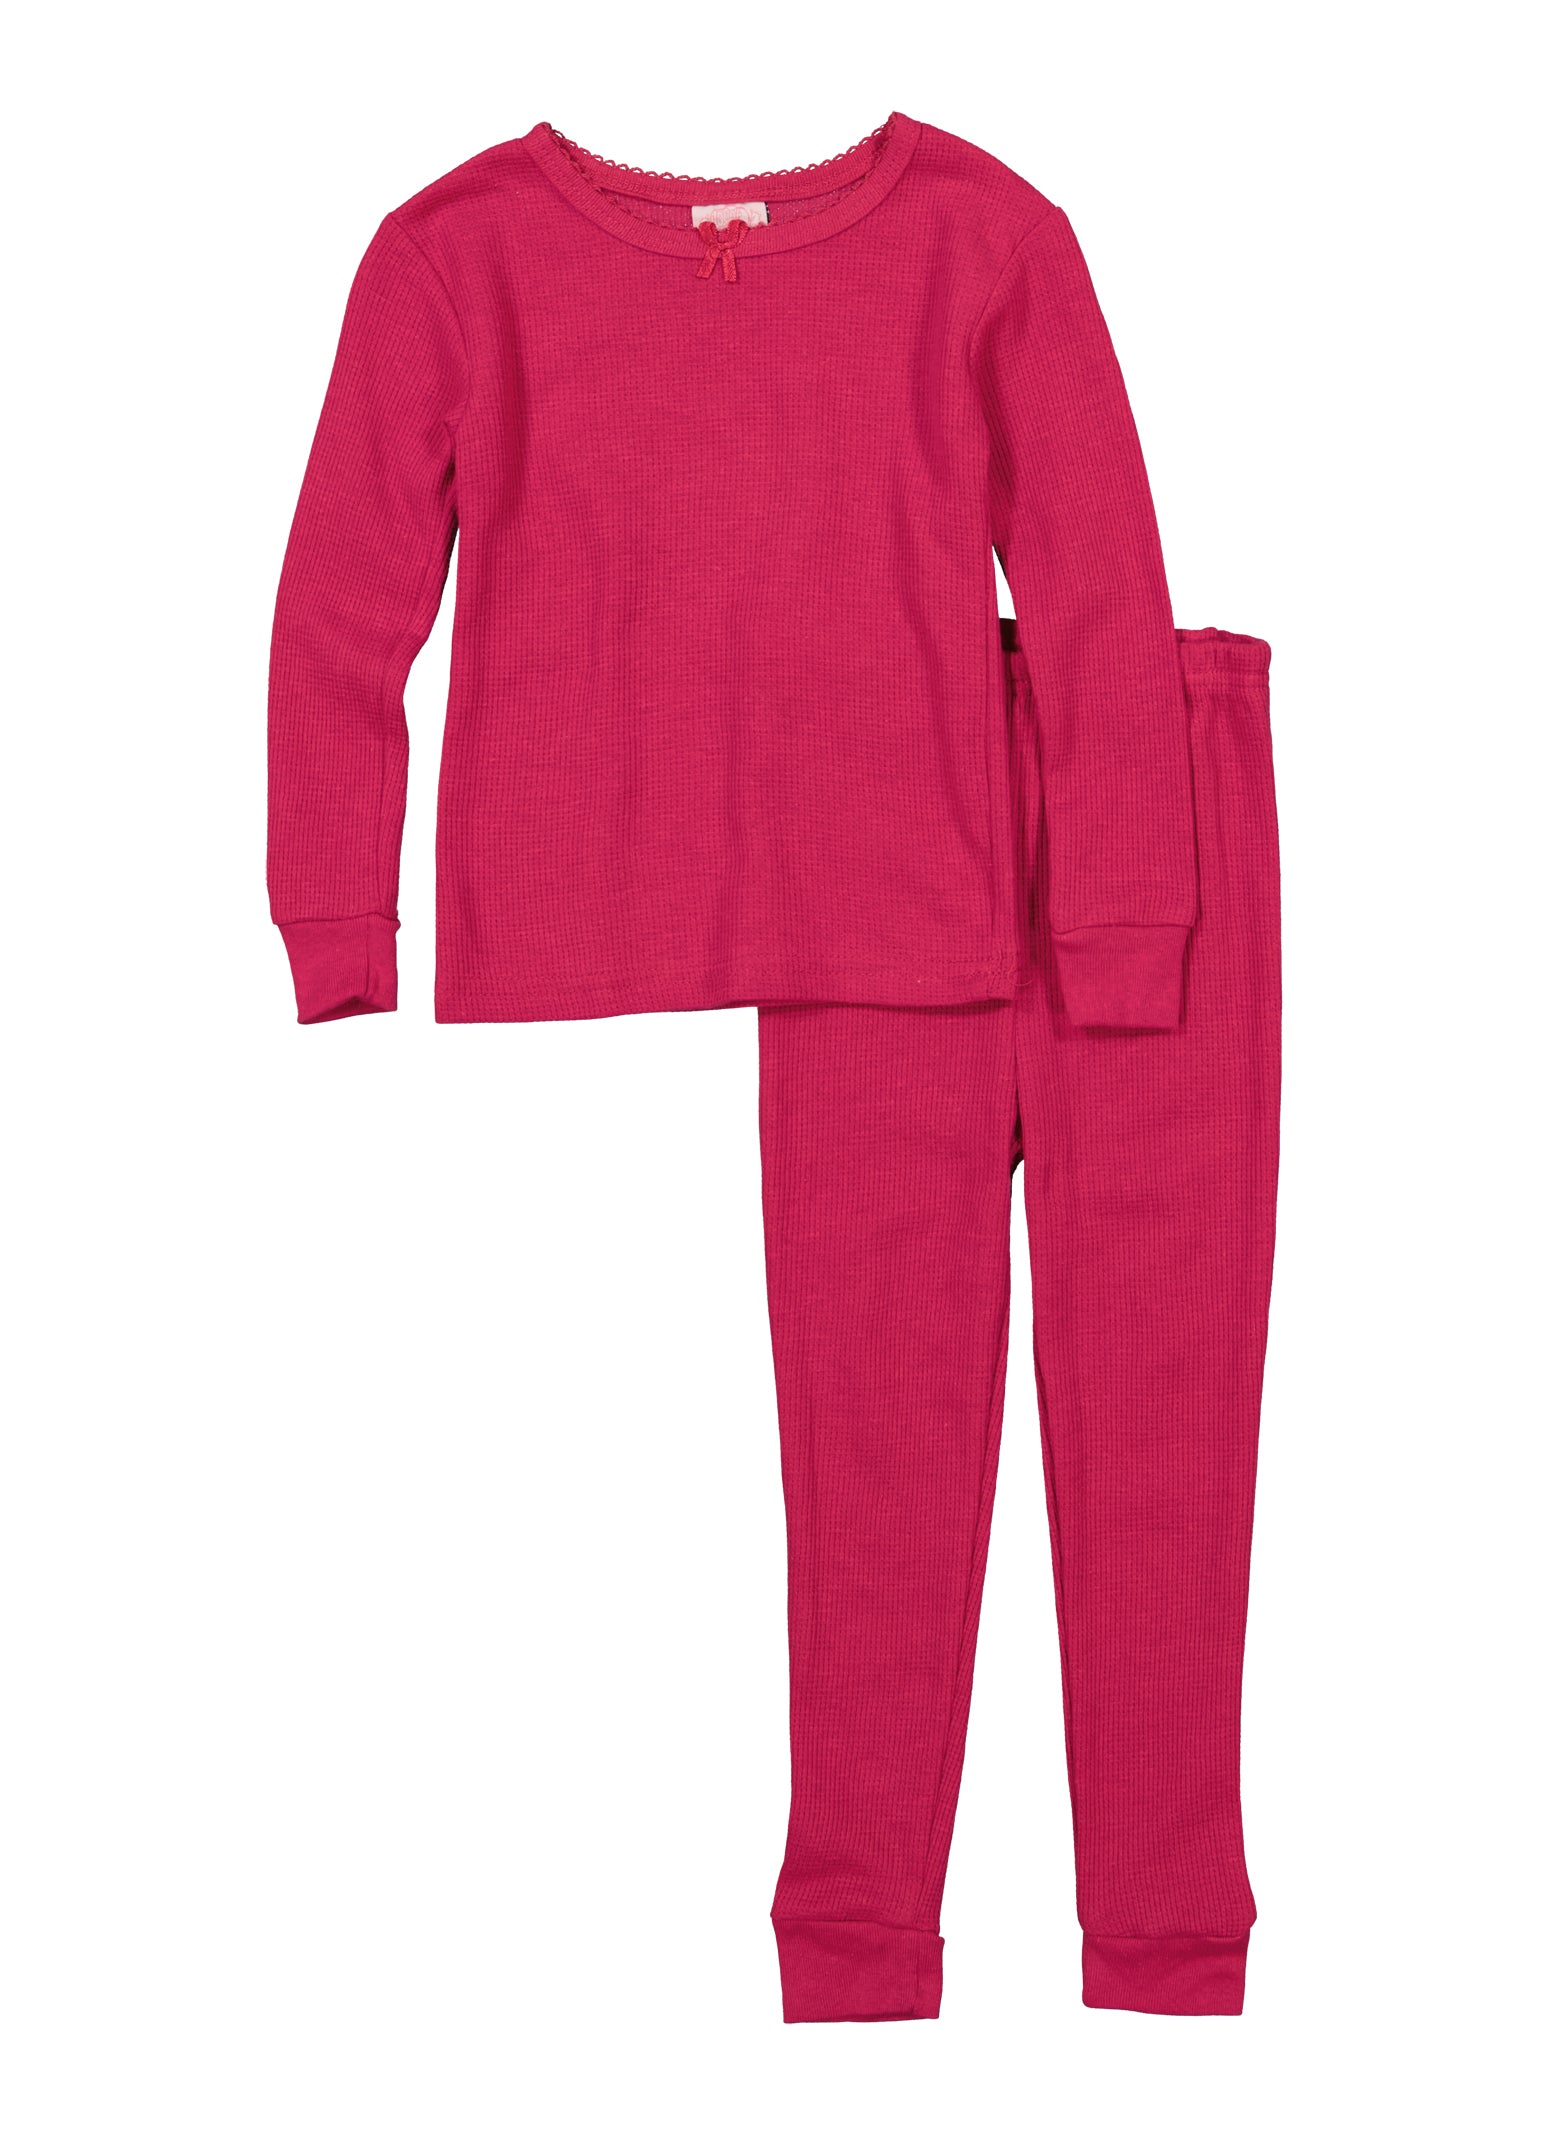 Girls Thermal Pajama Top and Pants - Hot Pink